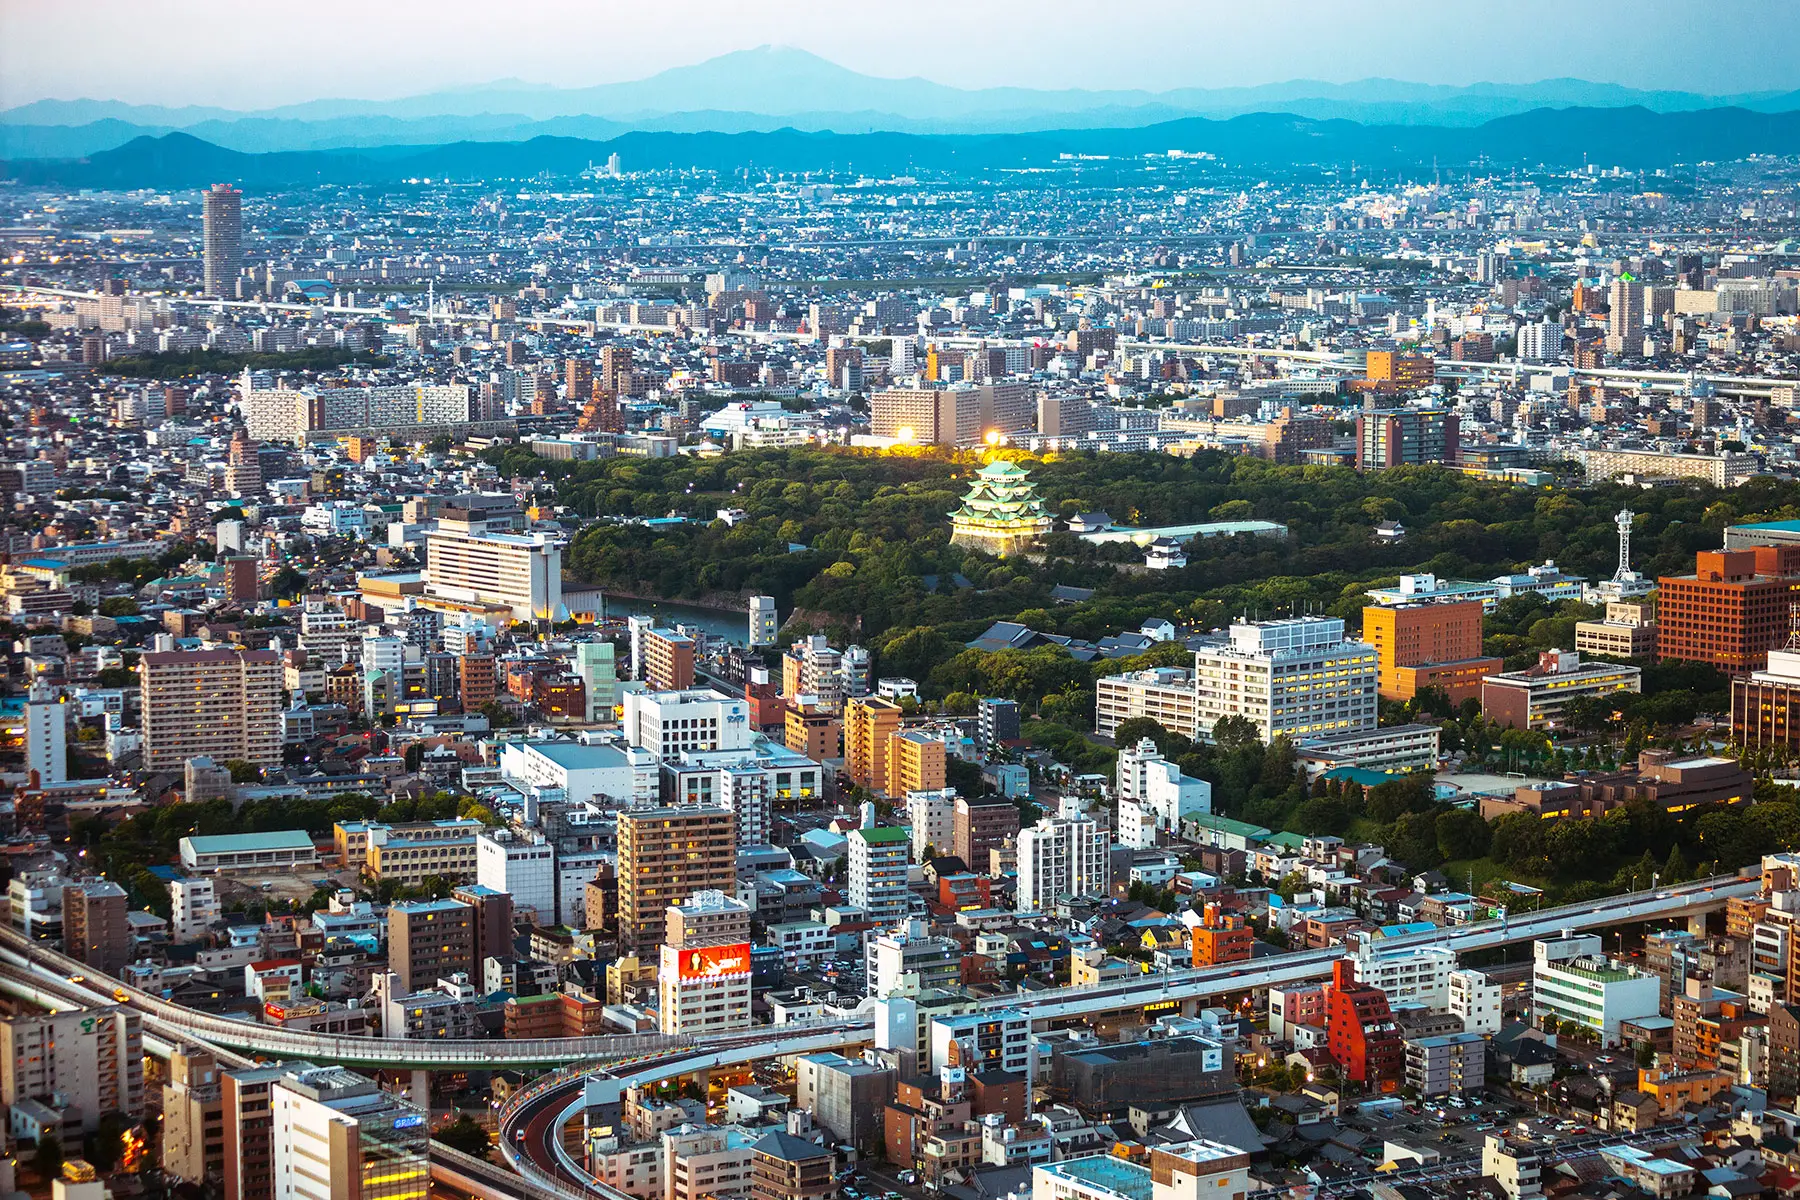 An aerial view of Nagoya